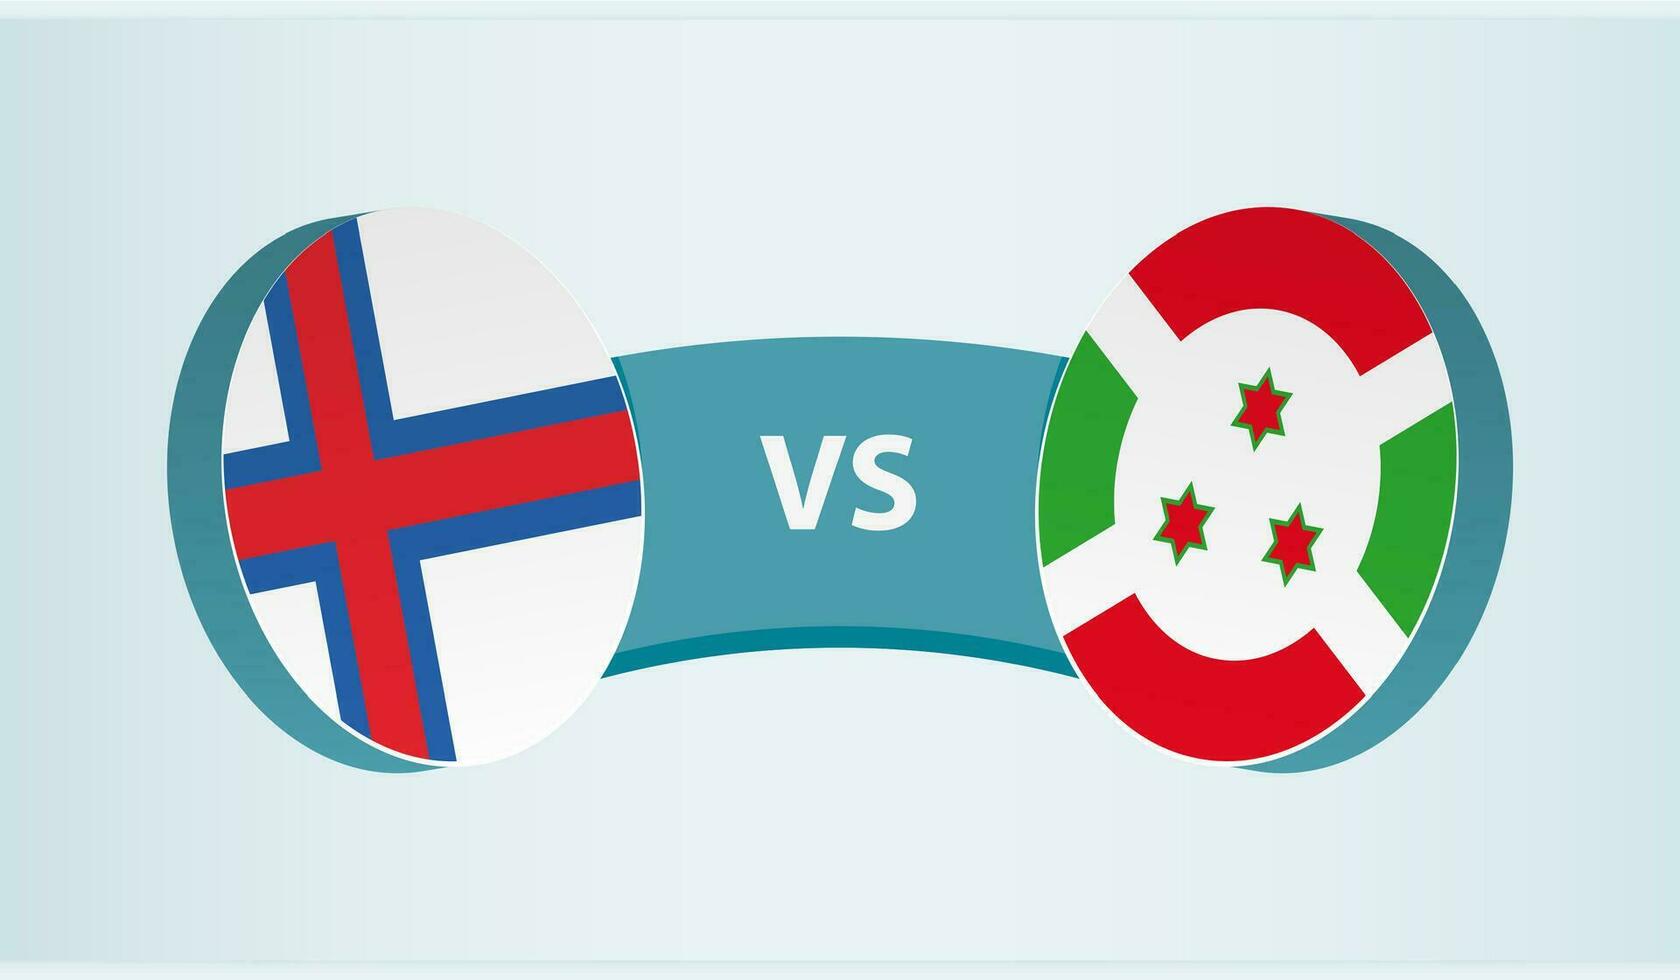 Faroe Islands versus Burundi, team sports competition concept. vector